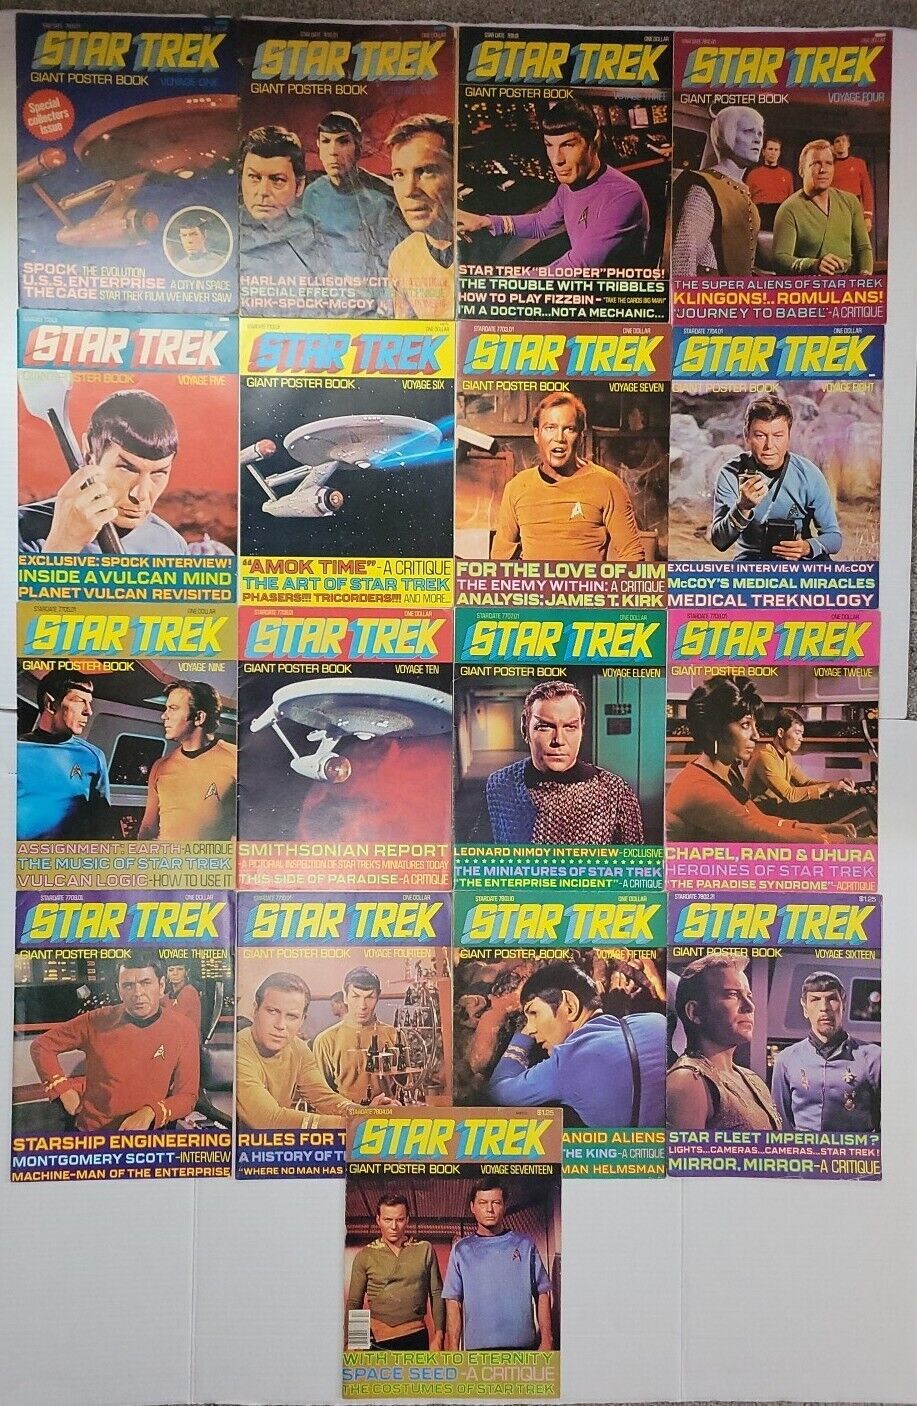 STAR TREK GIANT POSTER BOOK COMPLETE SET 1-17 VOYAGE LOT 1976 1977 1978 MAGAZINE